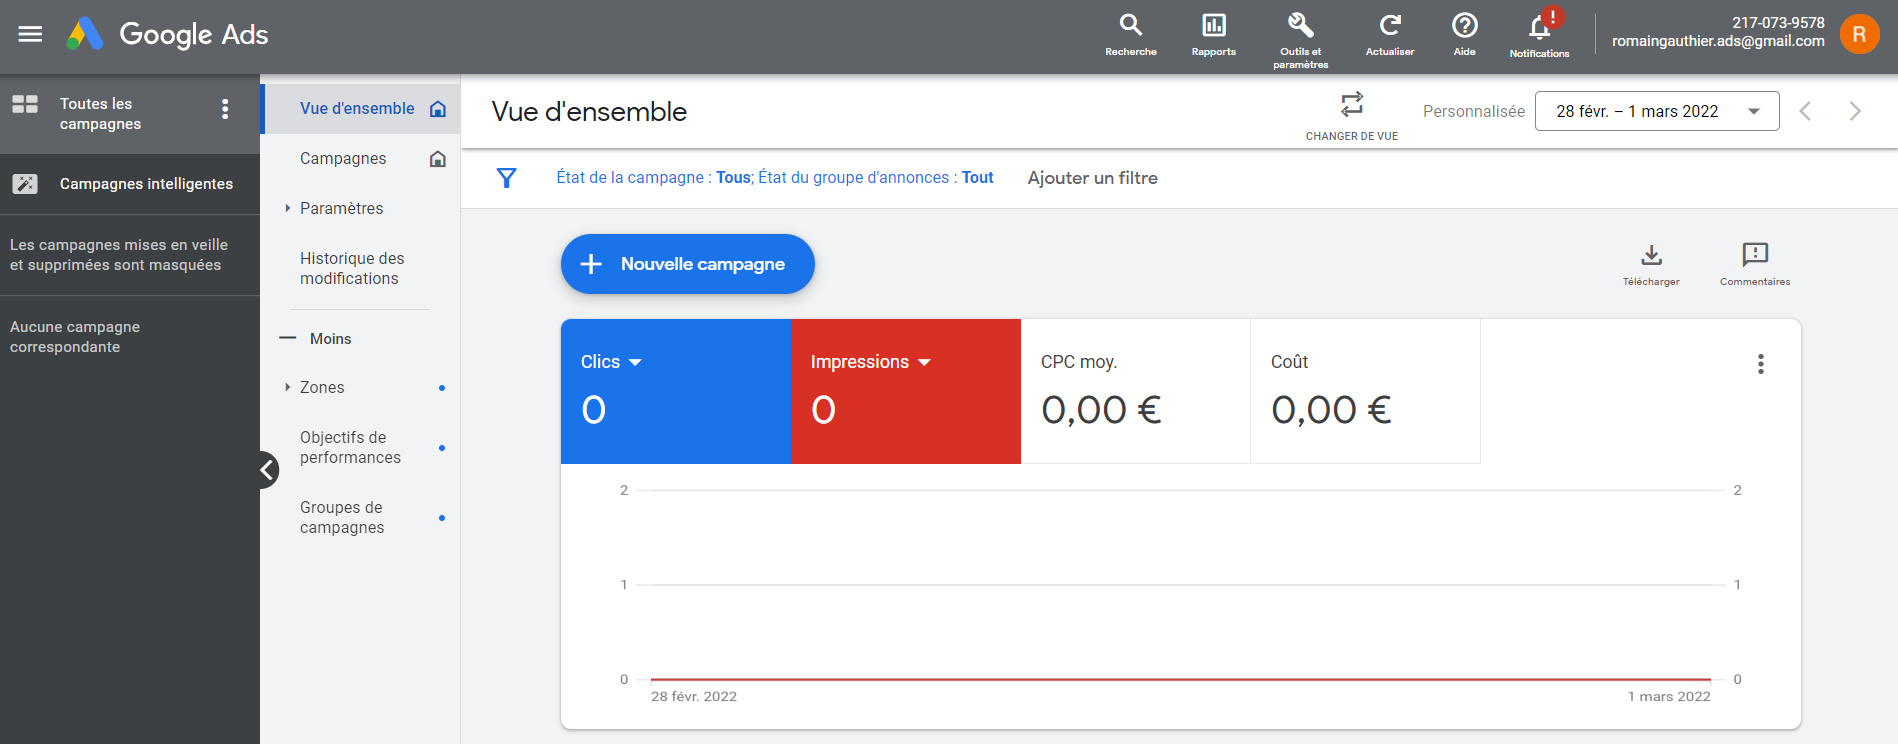 Vue d'ensemble de l'interface Google Ads. 0 Clics, 0 Impressions, 0,00 euros de CPC moyen, 0,00 euros de coûts